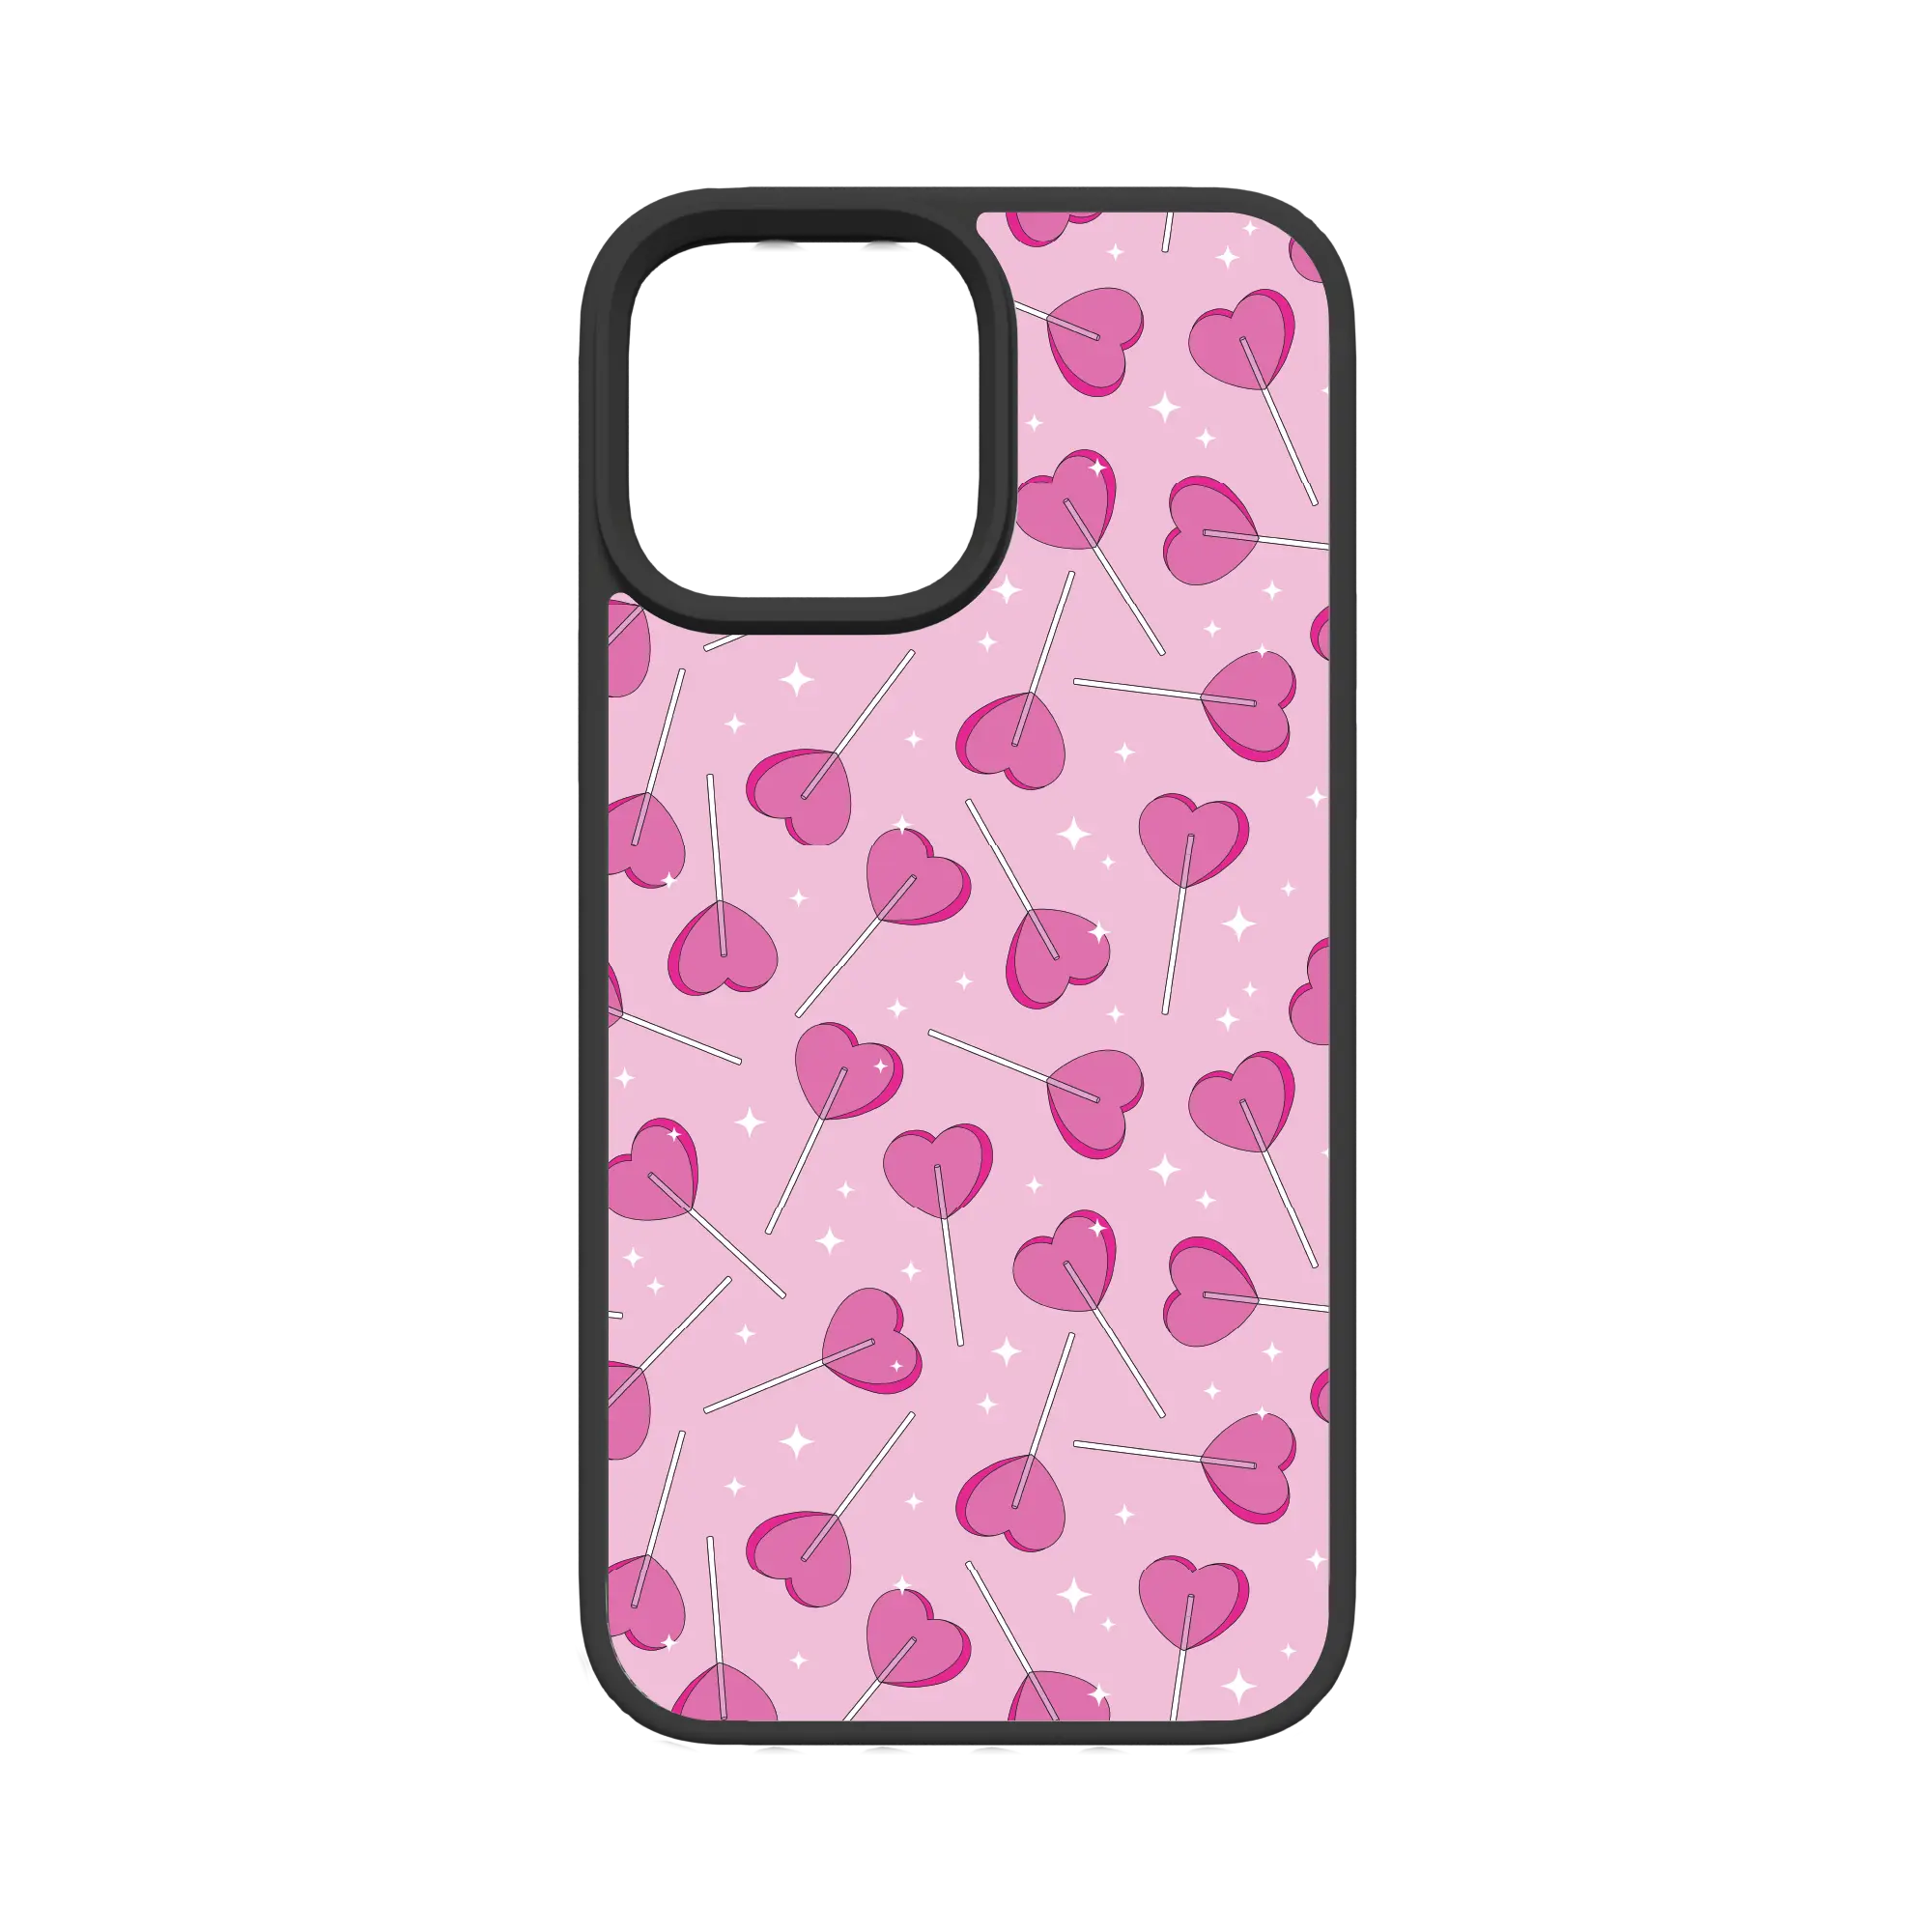 Apple-iPhone-13-Pro-Max-Crystal-Clear Sucker 4 Luv | Custom MagSafe Pink Heart Lollipop Case for Apple iPhone 13 Series cellhelmet cellhelmet